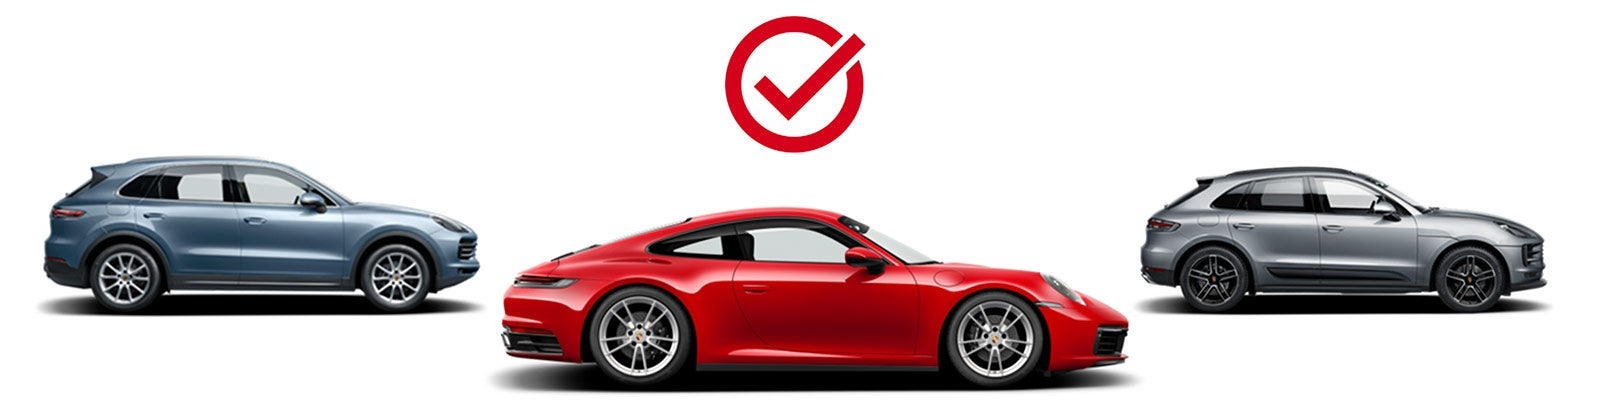 Choose Your Porsche | Porsche St. Louis in St. Louis MO